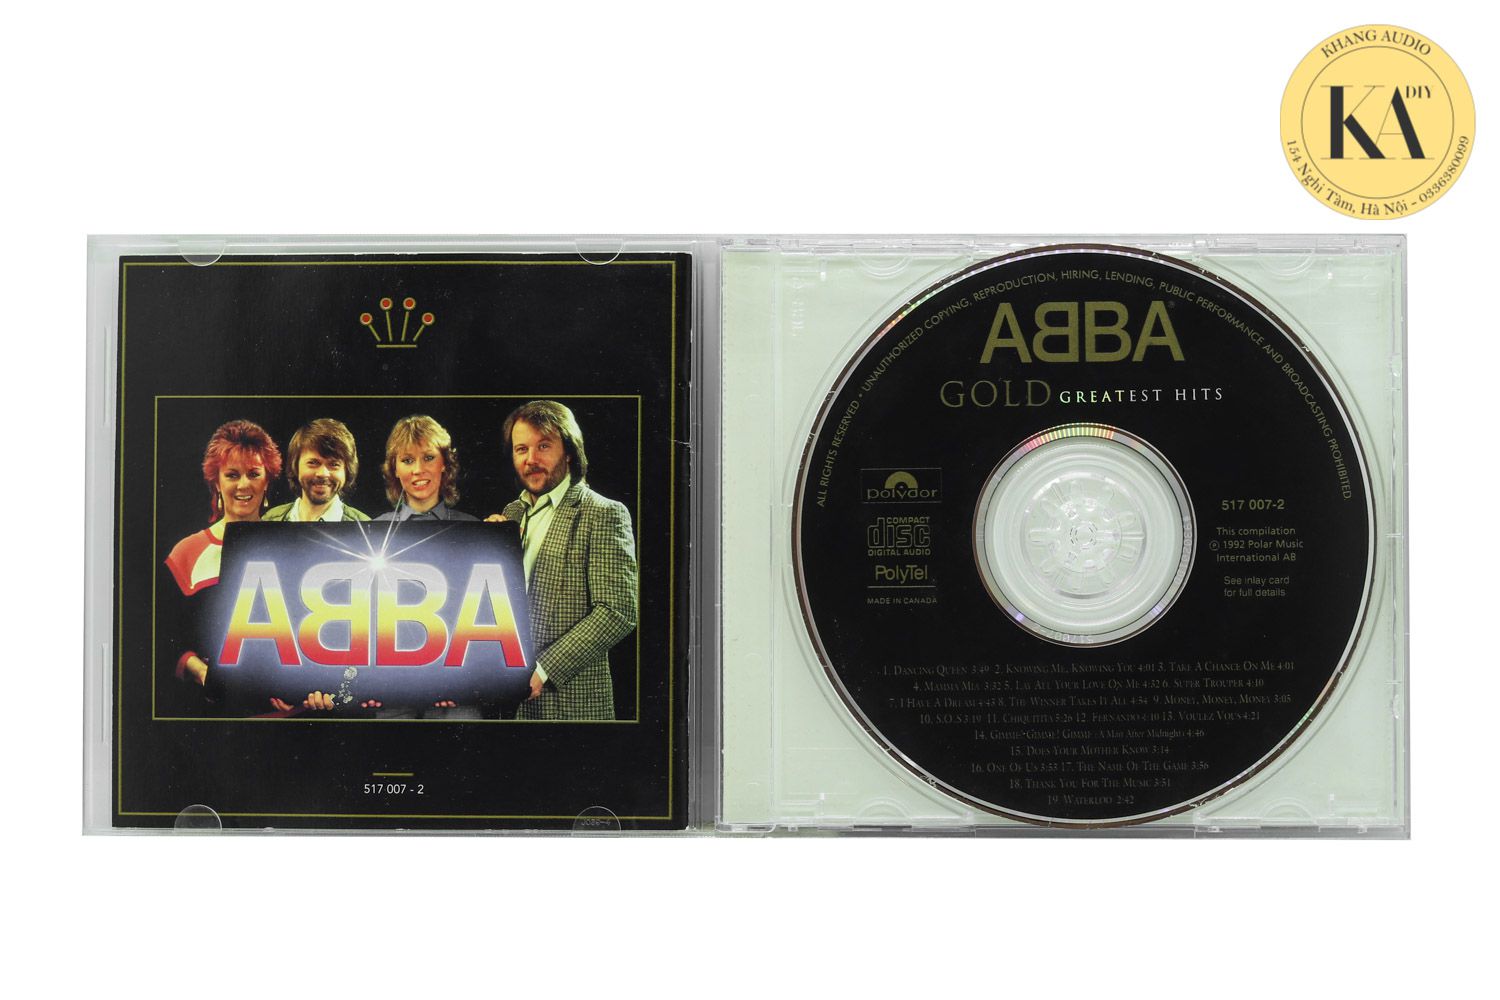 ABBA GOLD - Greatest Hits Khang Audio 0336380099